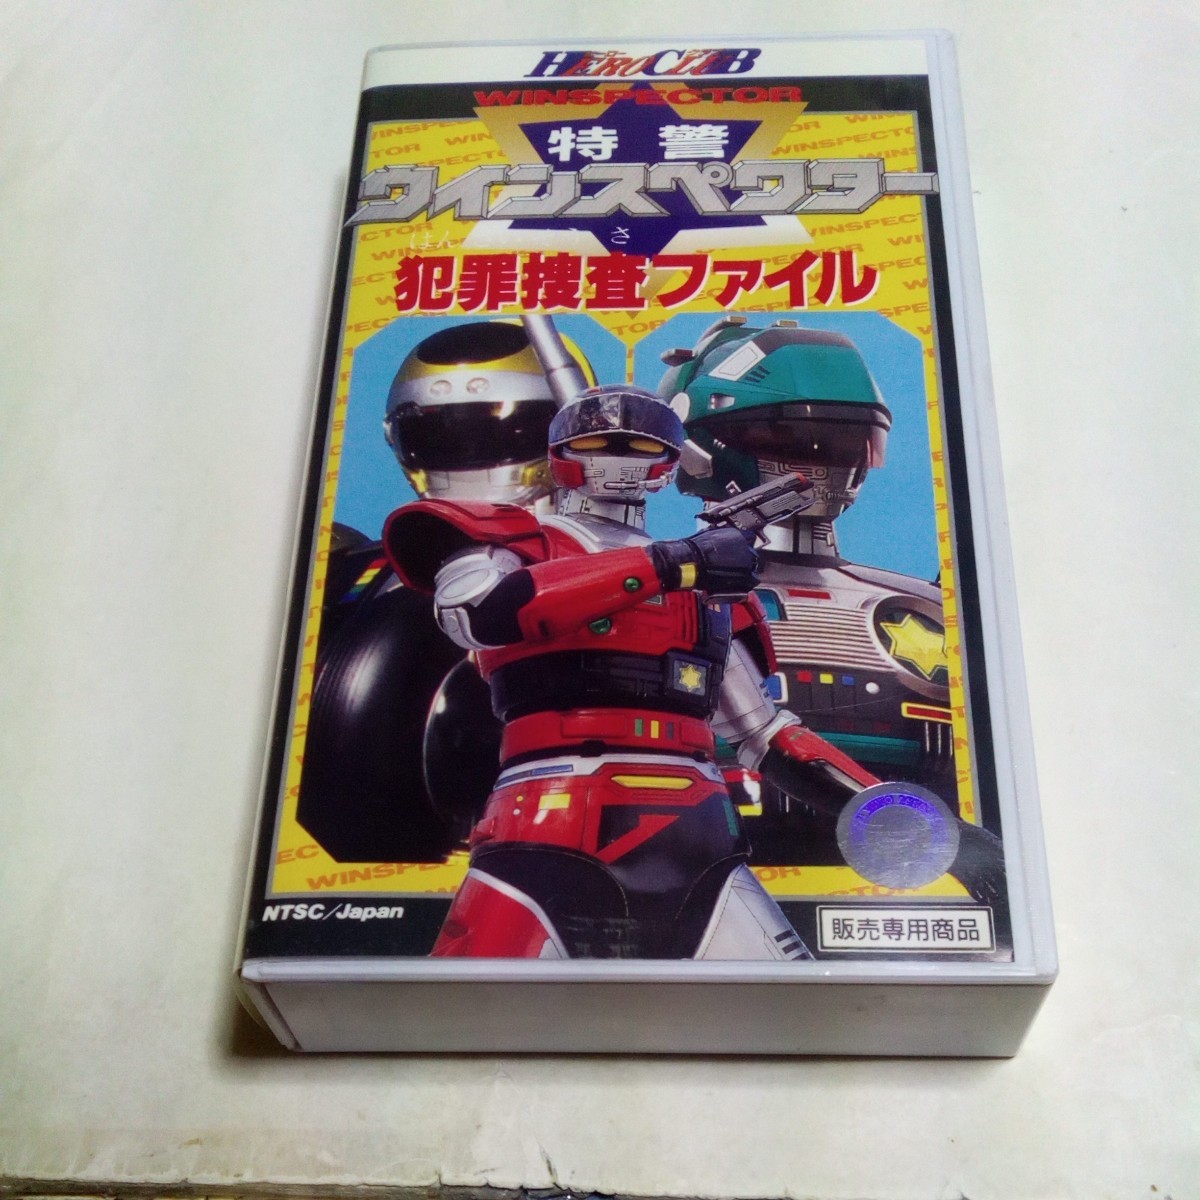 VHS видео герой Club Tokkei Winspector преступление .. файл DVD не сбор 